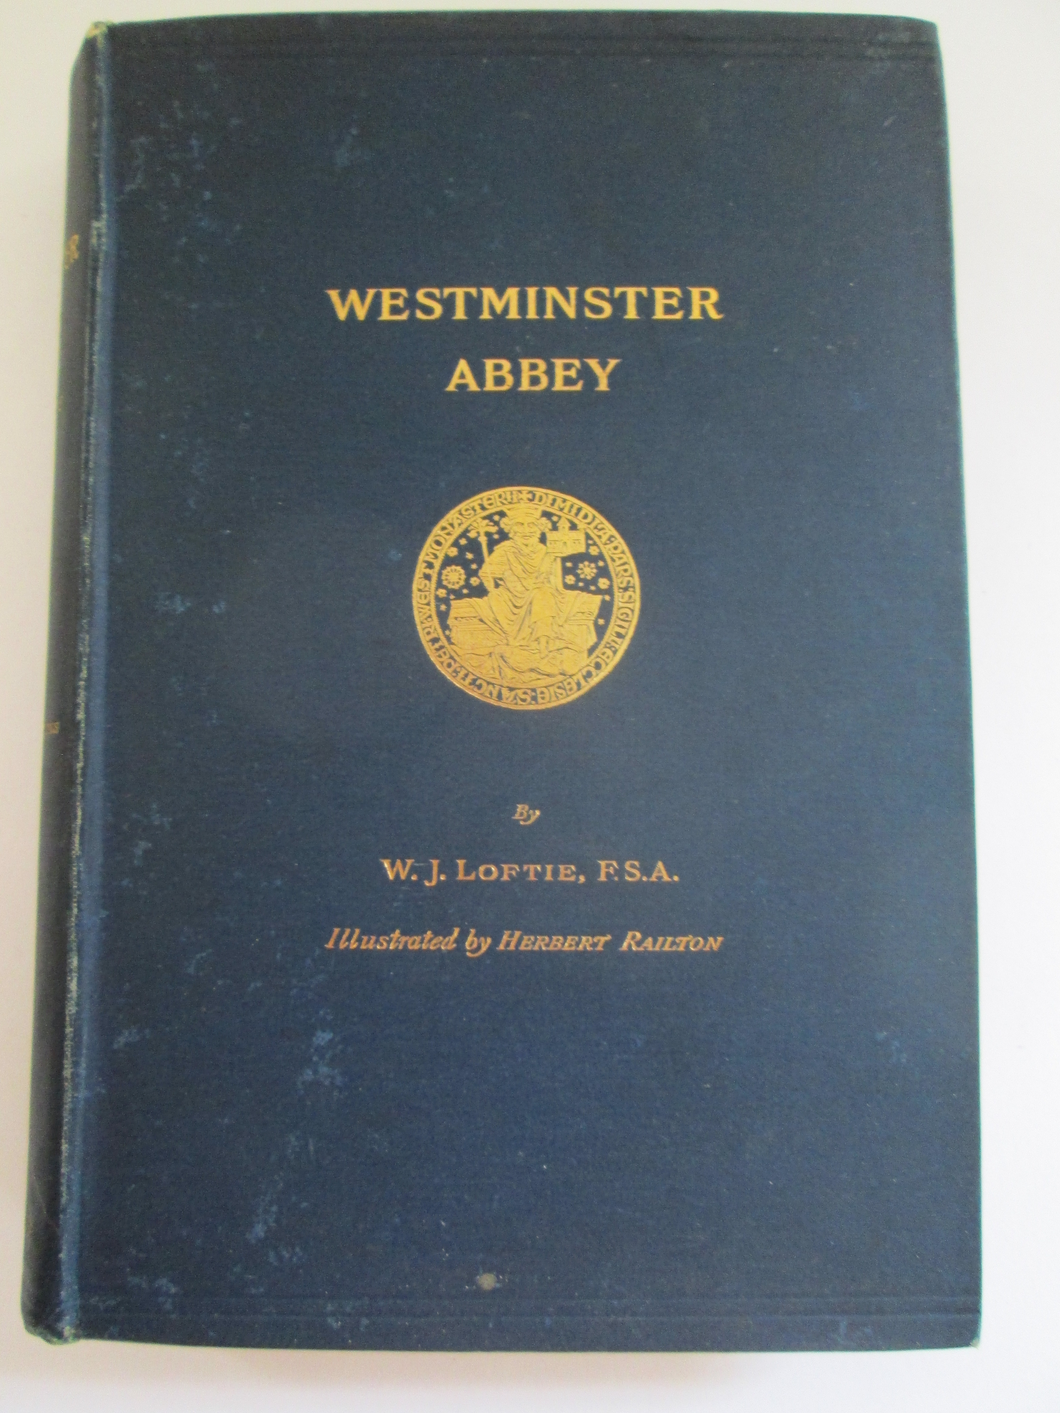 Westminster Abbey by W.J. Loftie, F.S.A 1891 HC